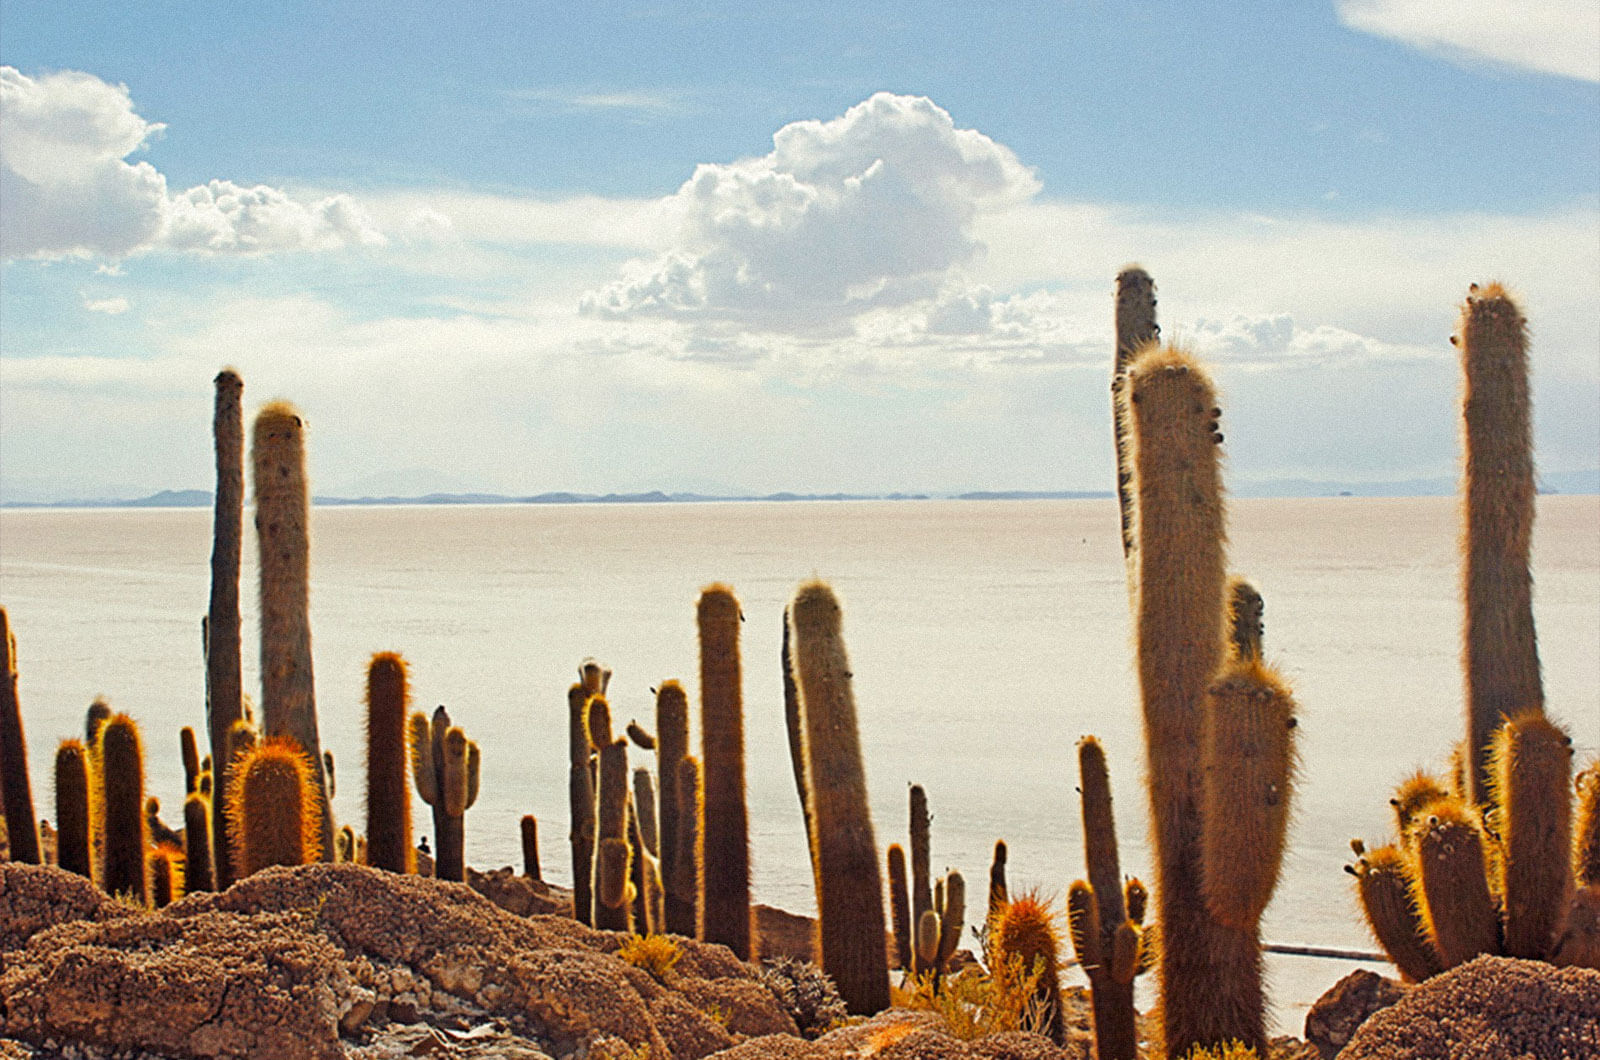 Island of the fish in the Uyuni salt flats, Pototsi, Bolivia